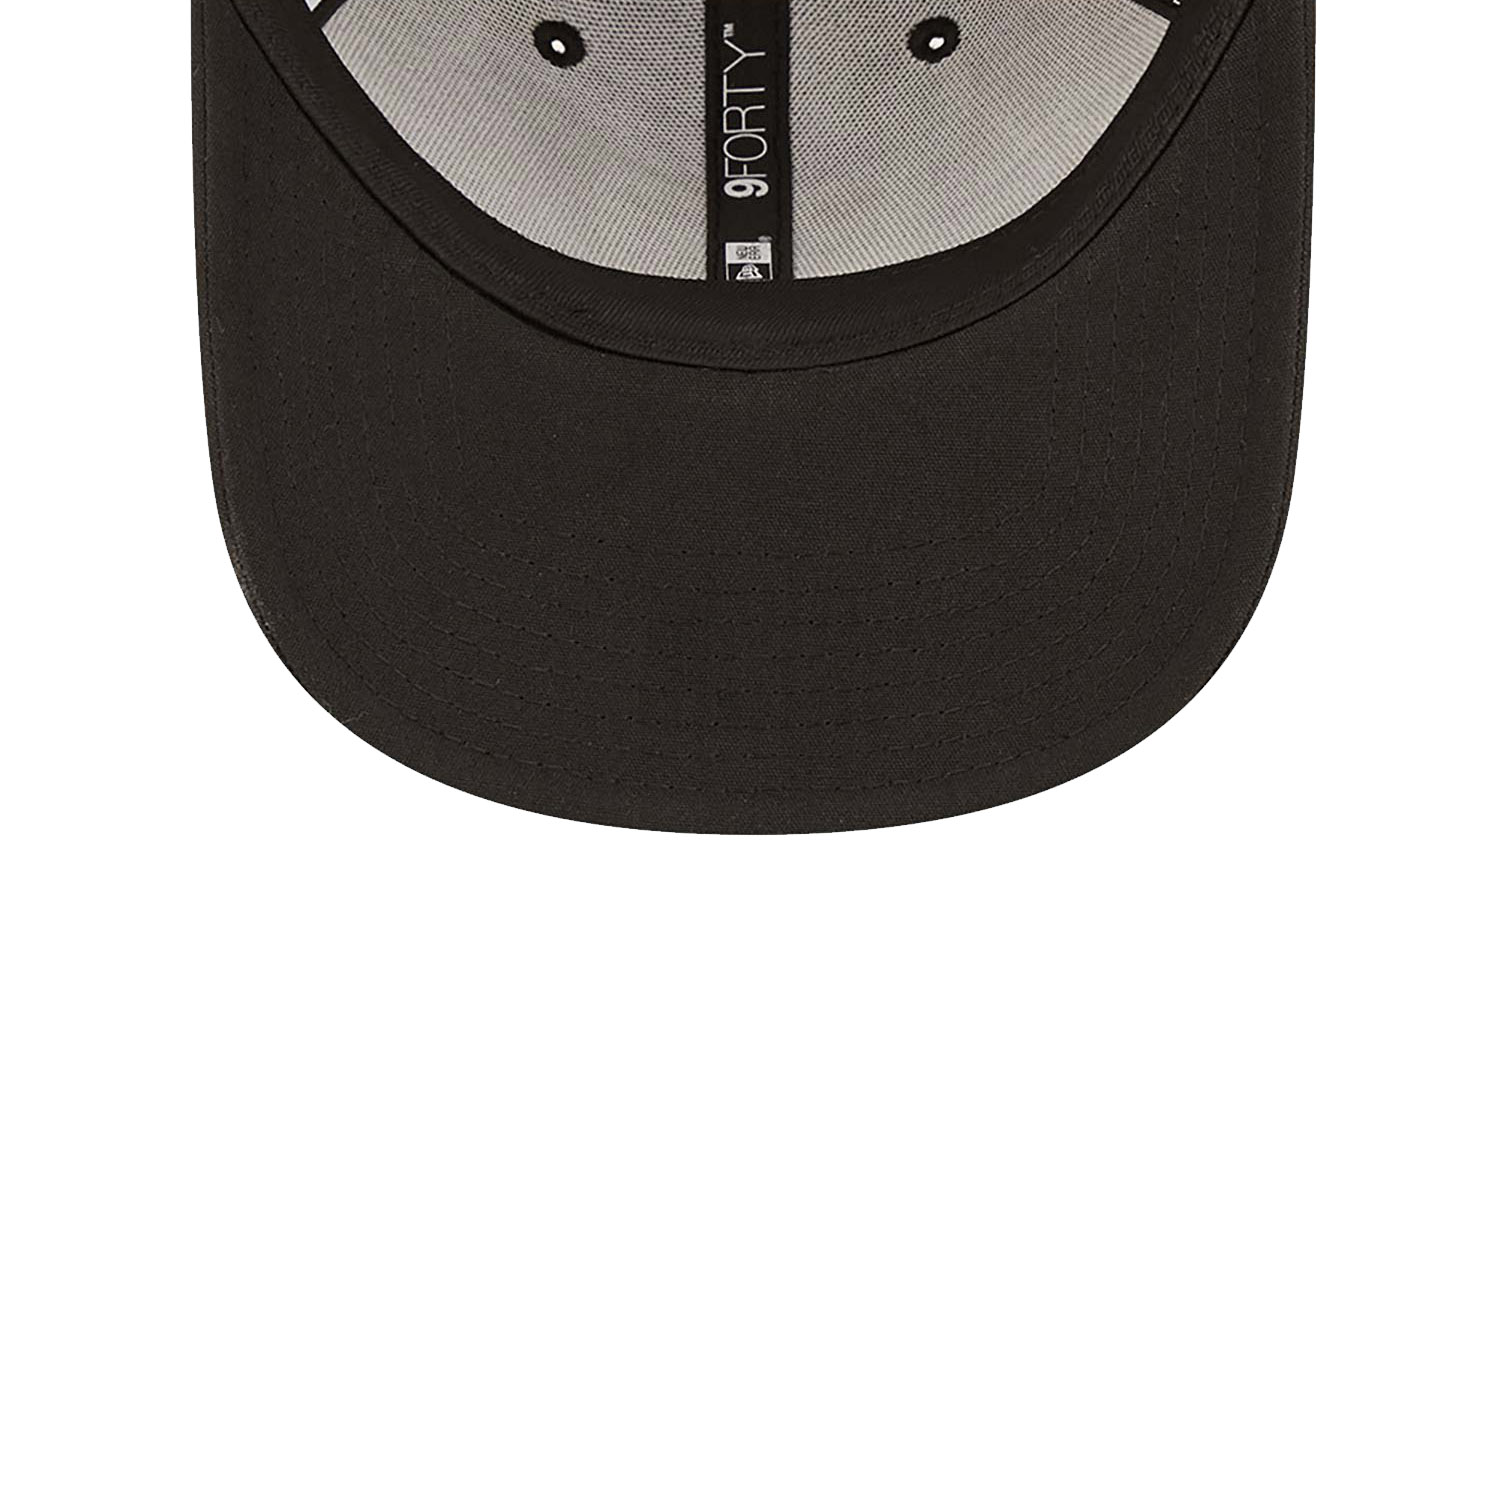 Las Vegas Raiders Repreve Monochrome Black 9FORTY Adjustable Cap